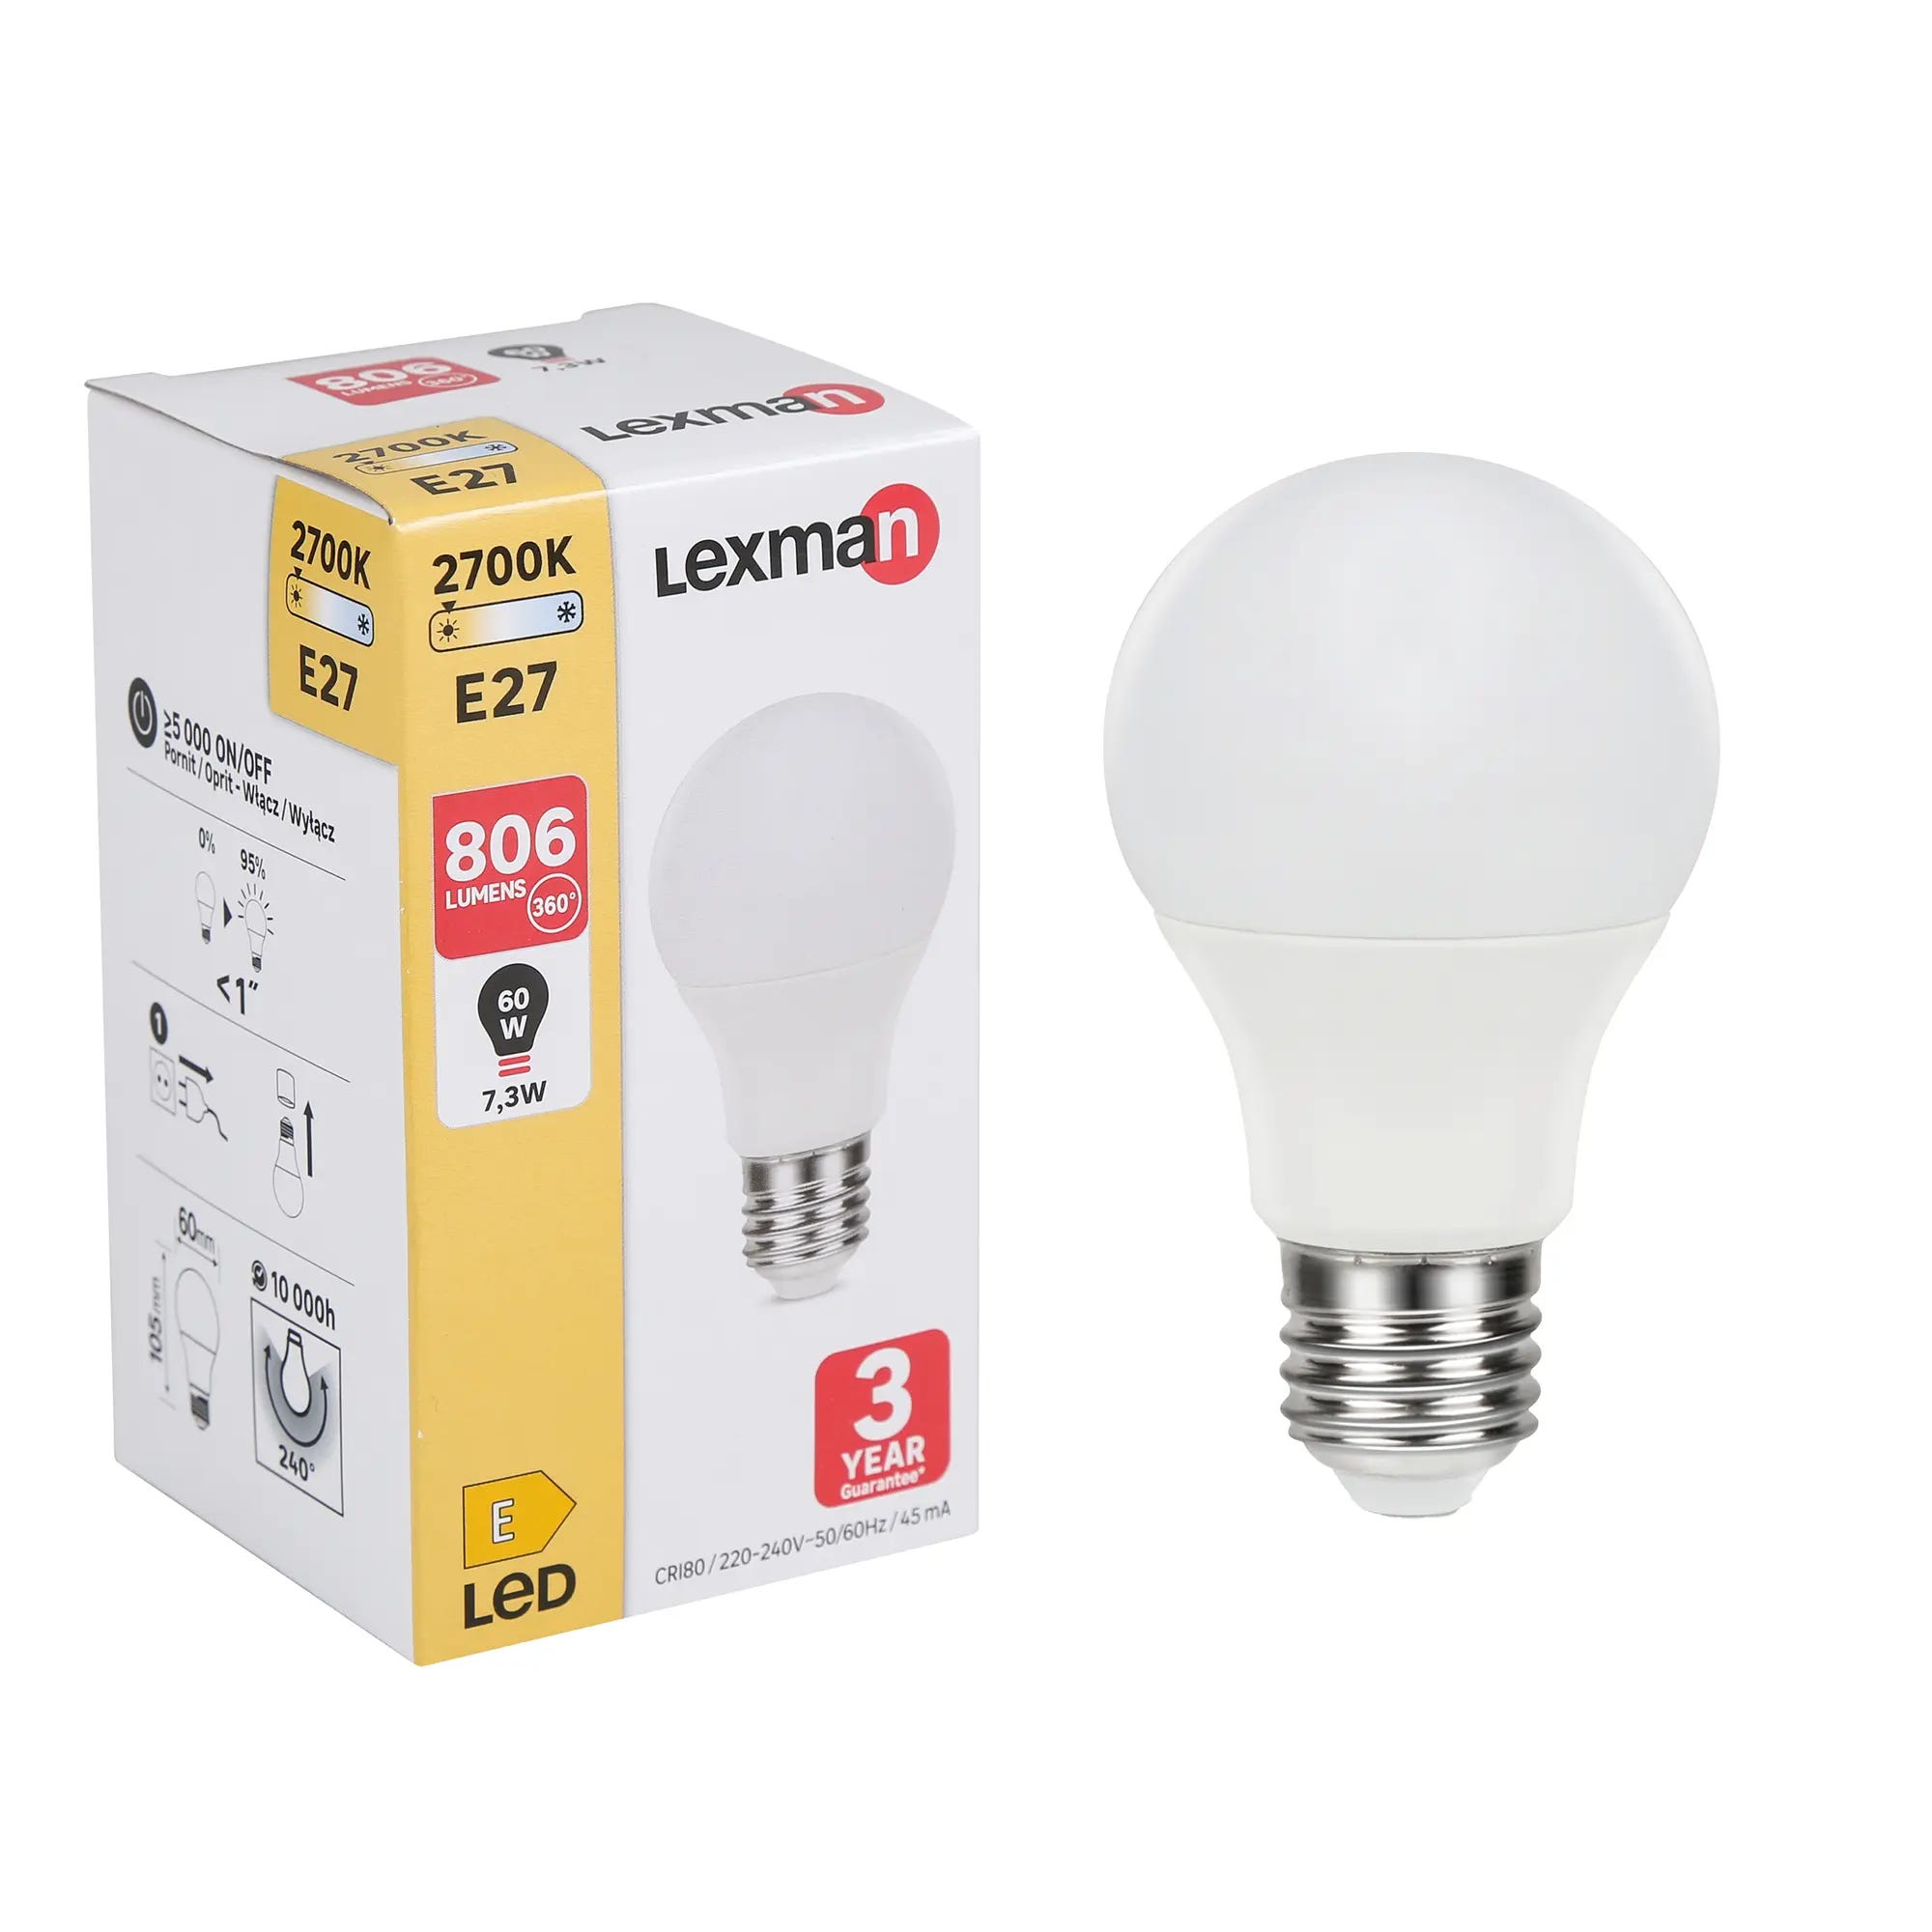 Ampoule led, E27, 806lm = 60W, blanc chaud, LEXMAN